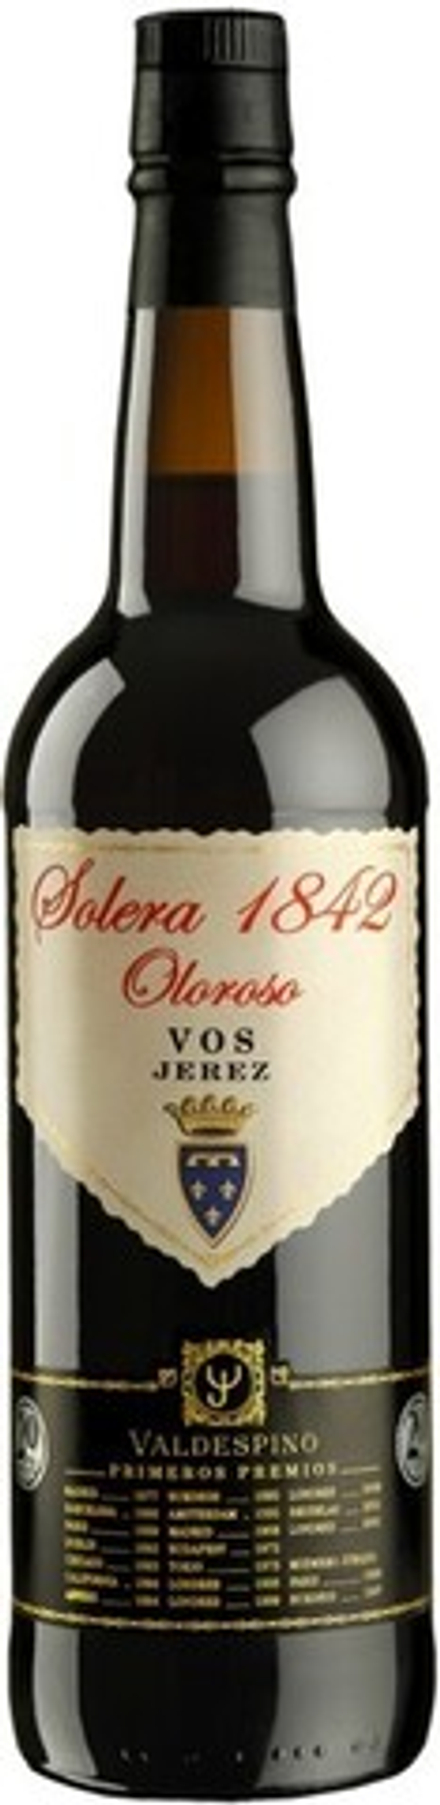 Херес Valdespino Oloroso Solera 1842, 0,75л